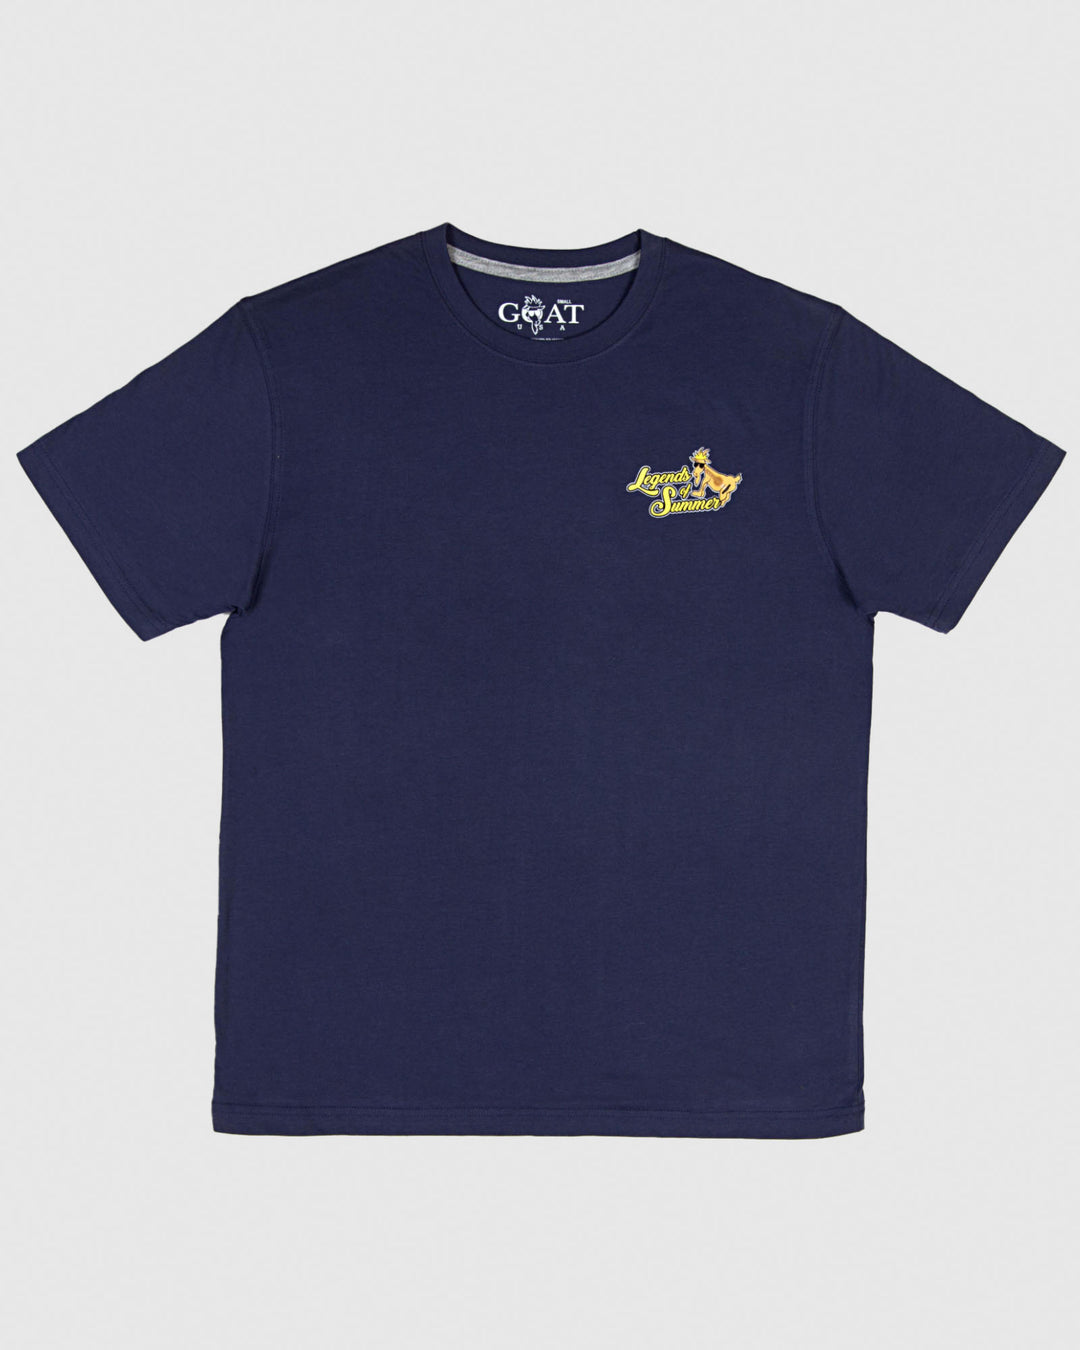 Navy t-shirt with guitar goat design